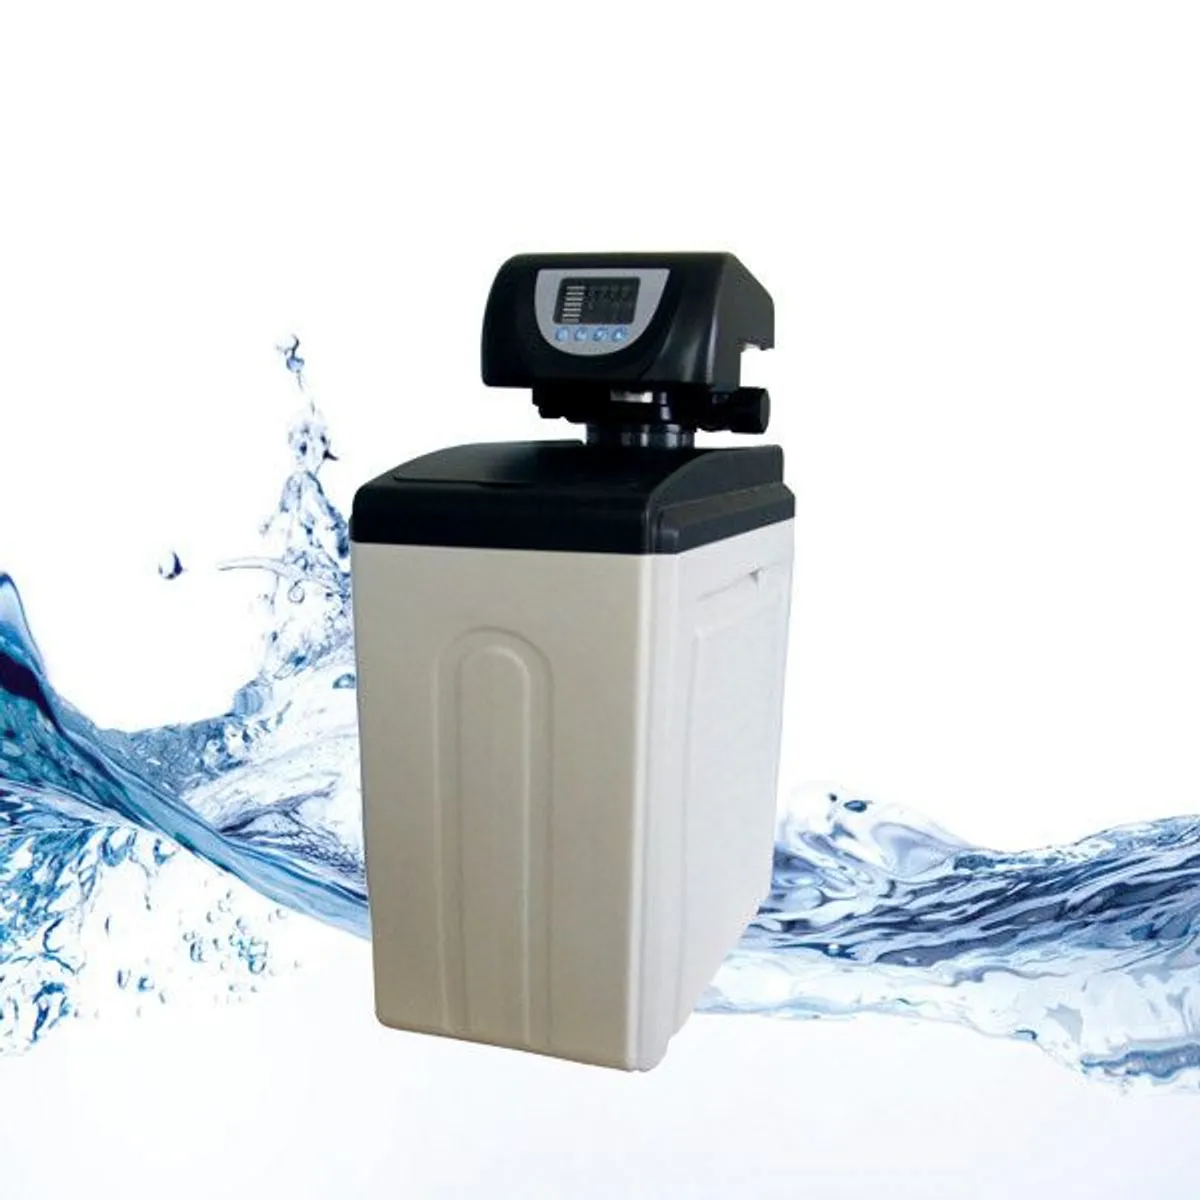 Aquaclear Water Softener